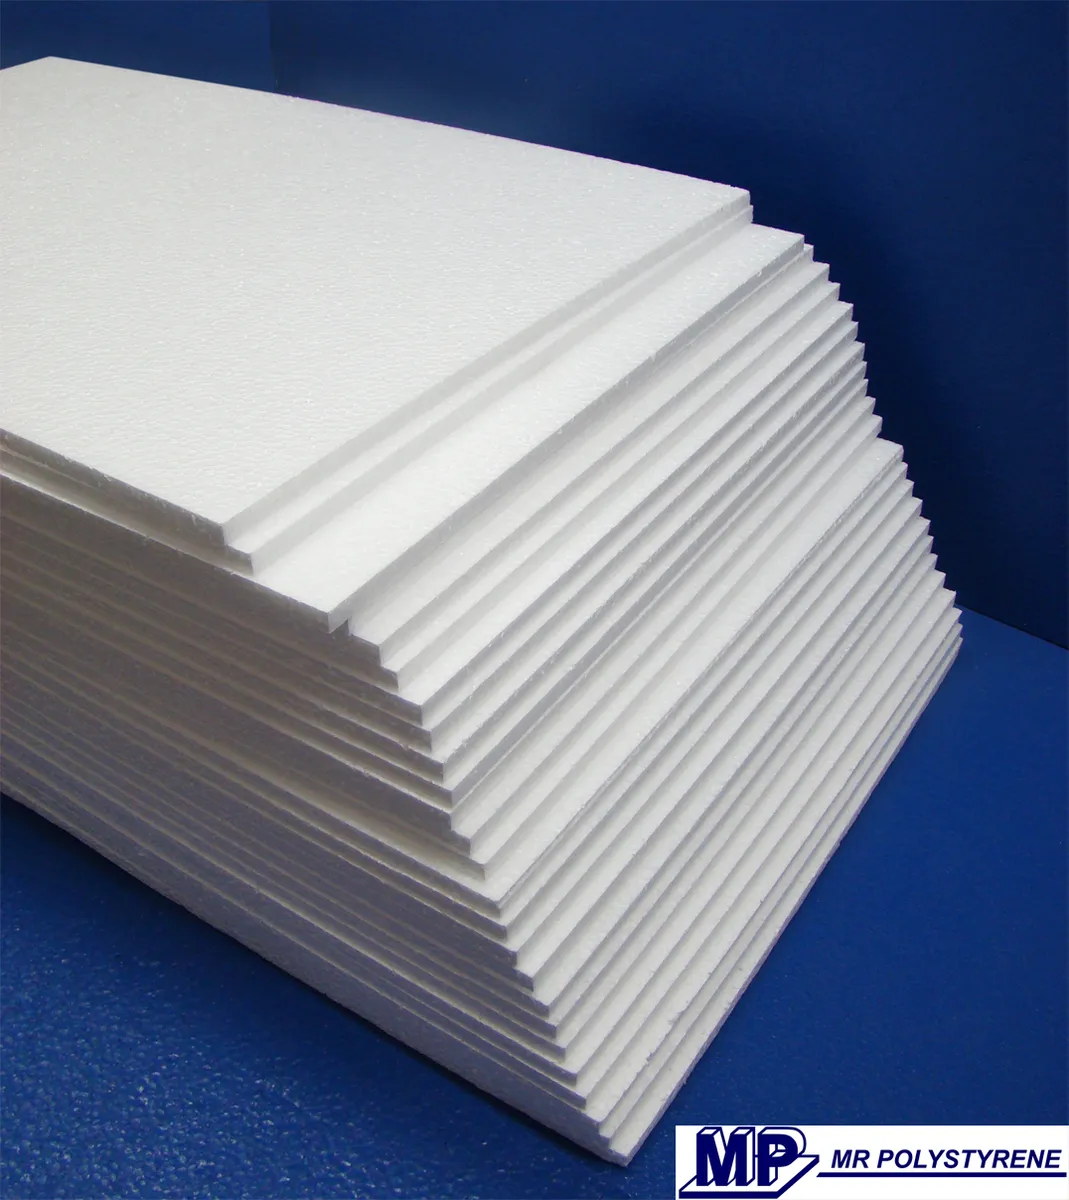 Foam Ninja Polyethylene Foam Sheet 12 X 16 X 1 Inch Thick 2 Pack White Foam  Inserts High Density Closed Cell PE Case Packaging Shipping 